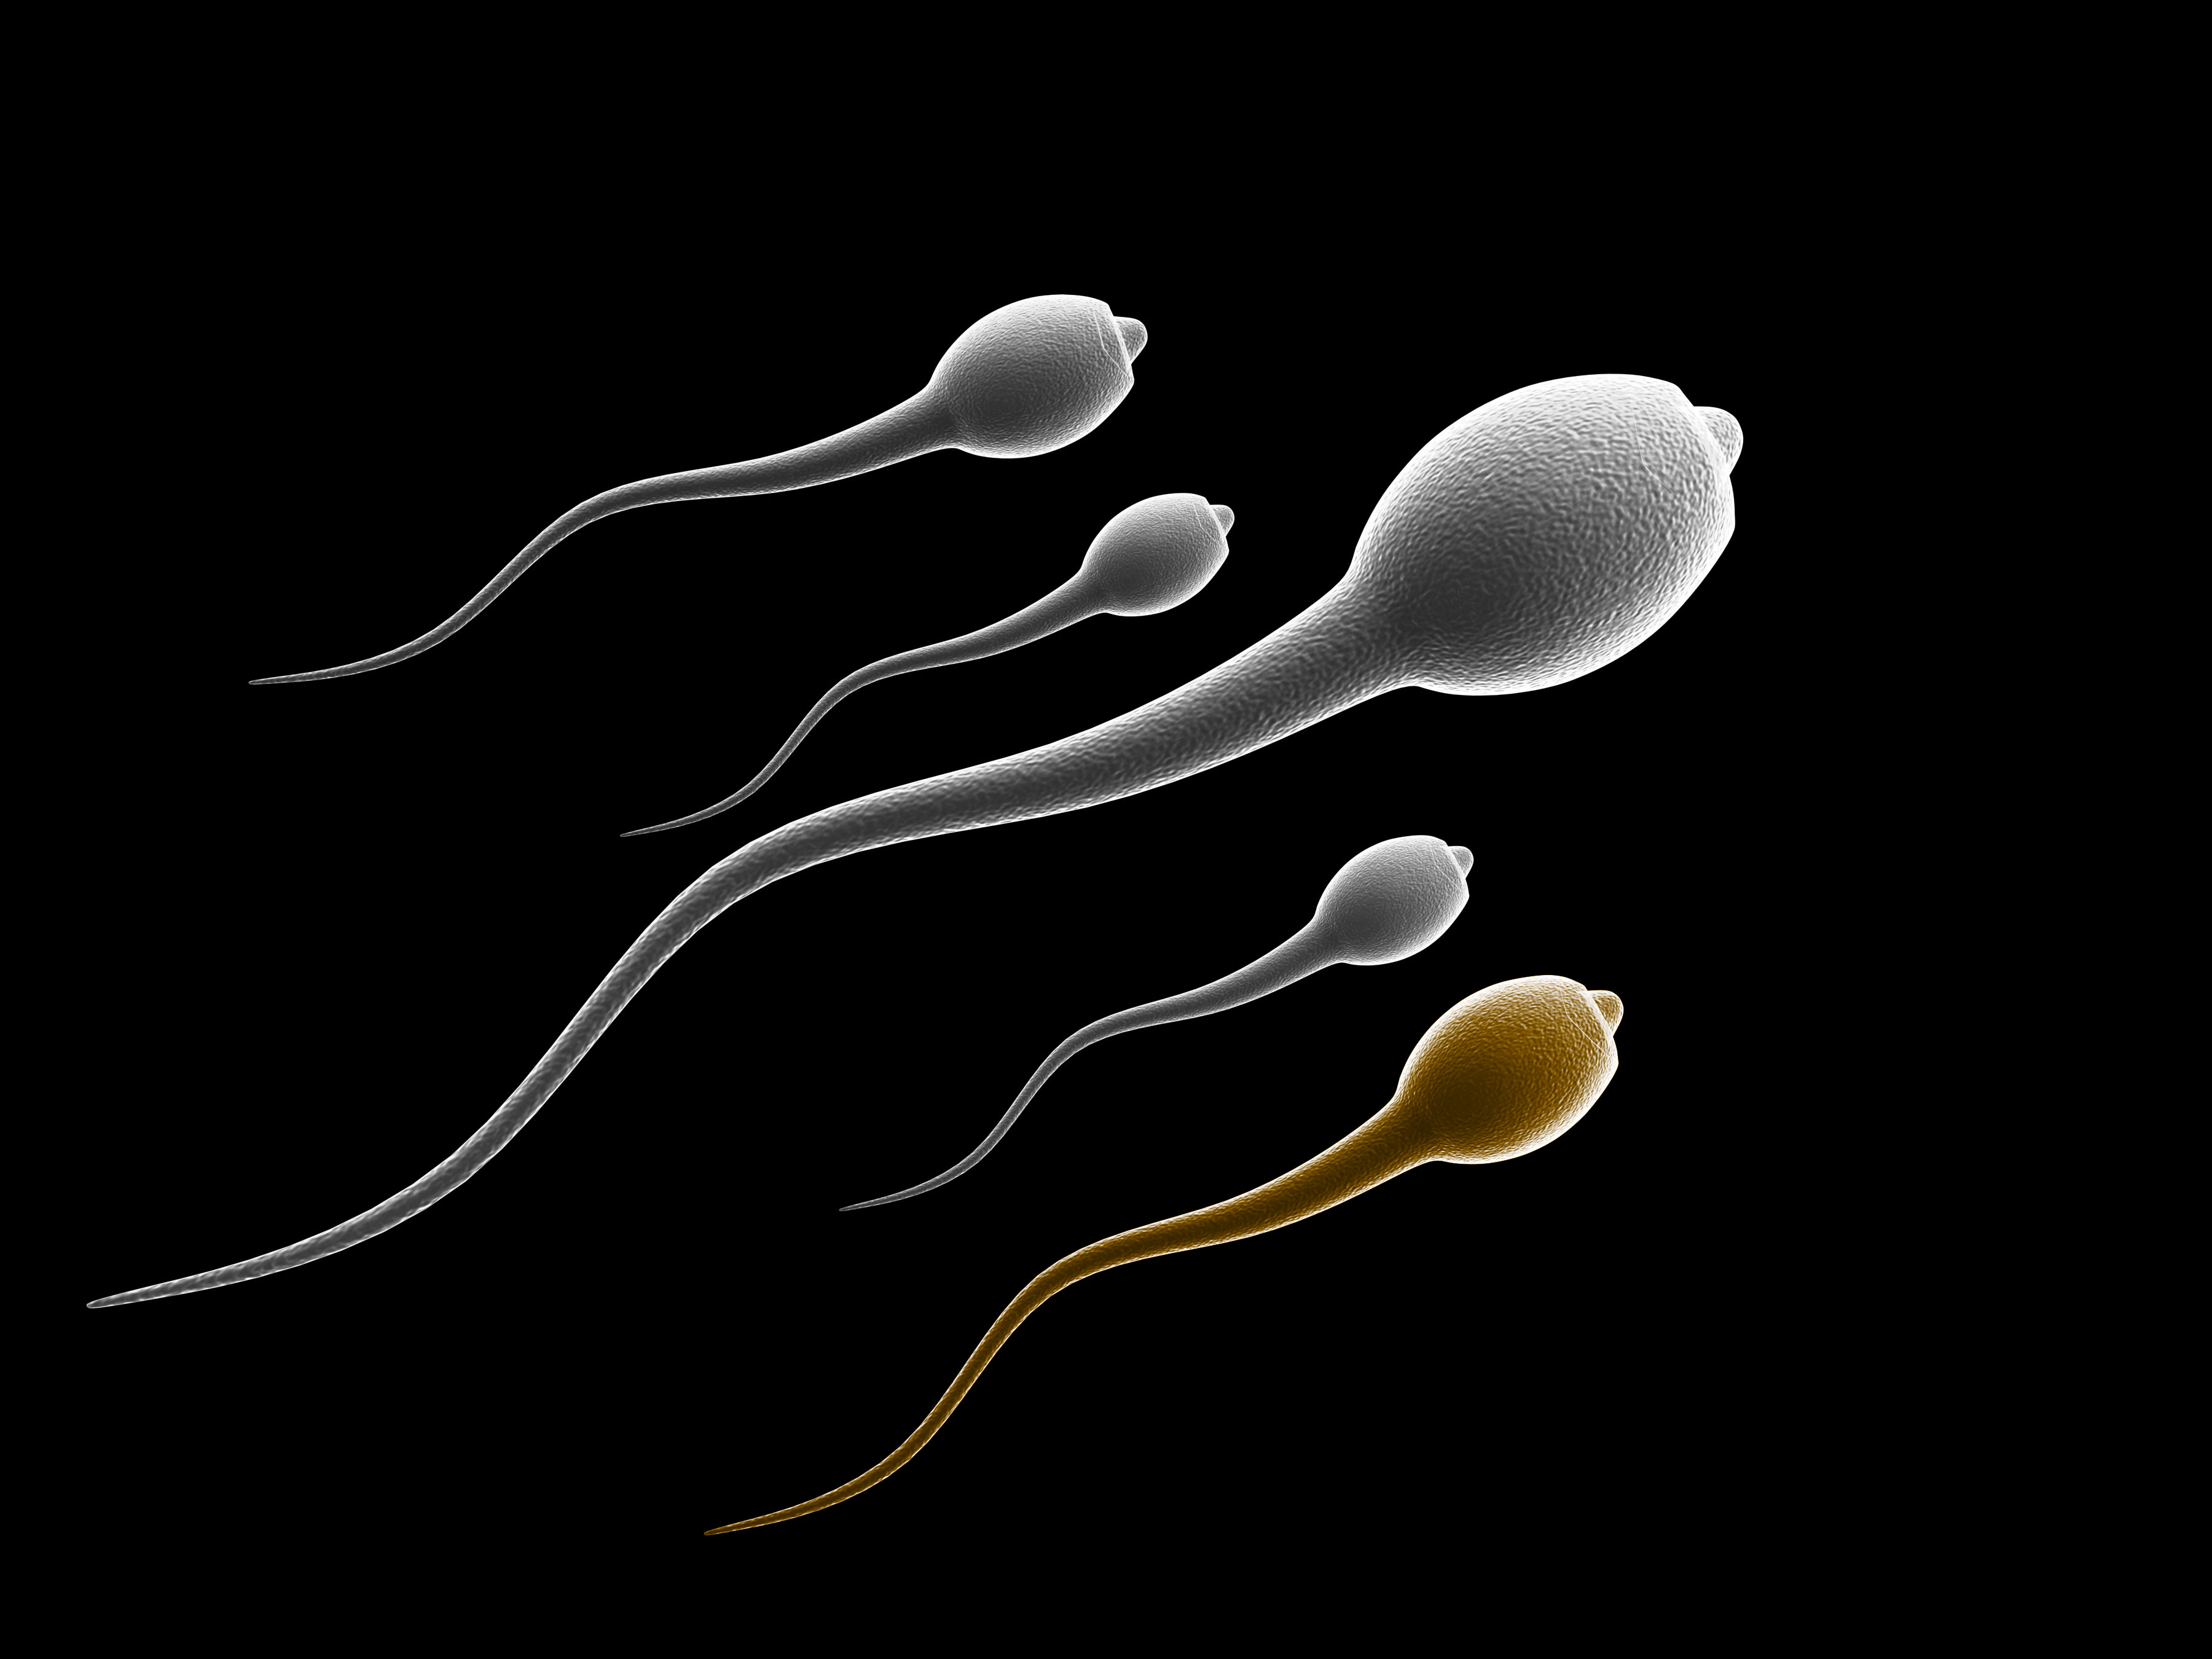 сперма во влагалище у детей фото 3